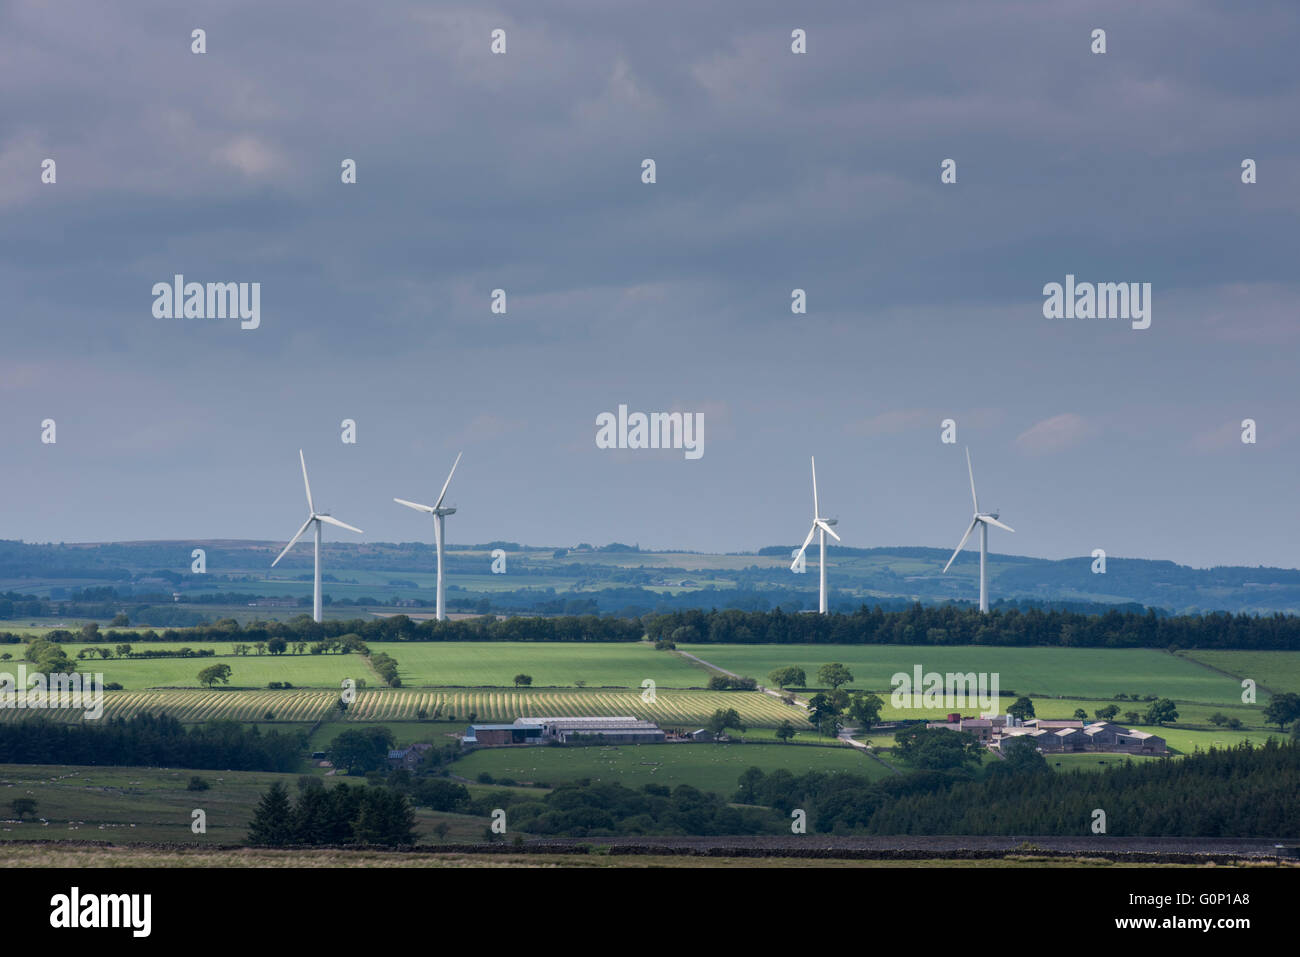 4 giant wind turbines (eyesore?) tower over farmland fields in scenic countryside - Knabs Ridge wind farm near Harrogate, North Yorkshire, England. Stock Photo